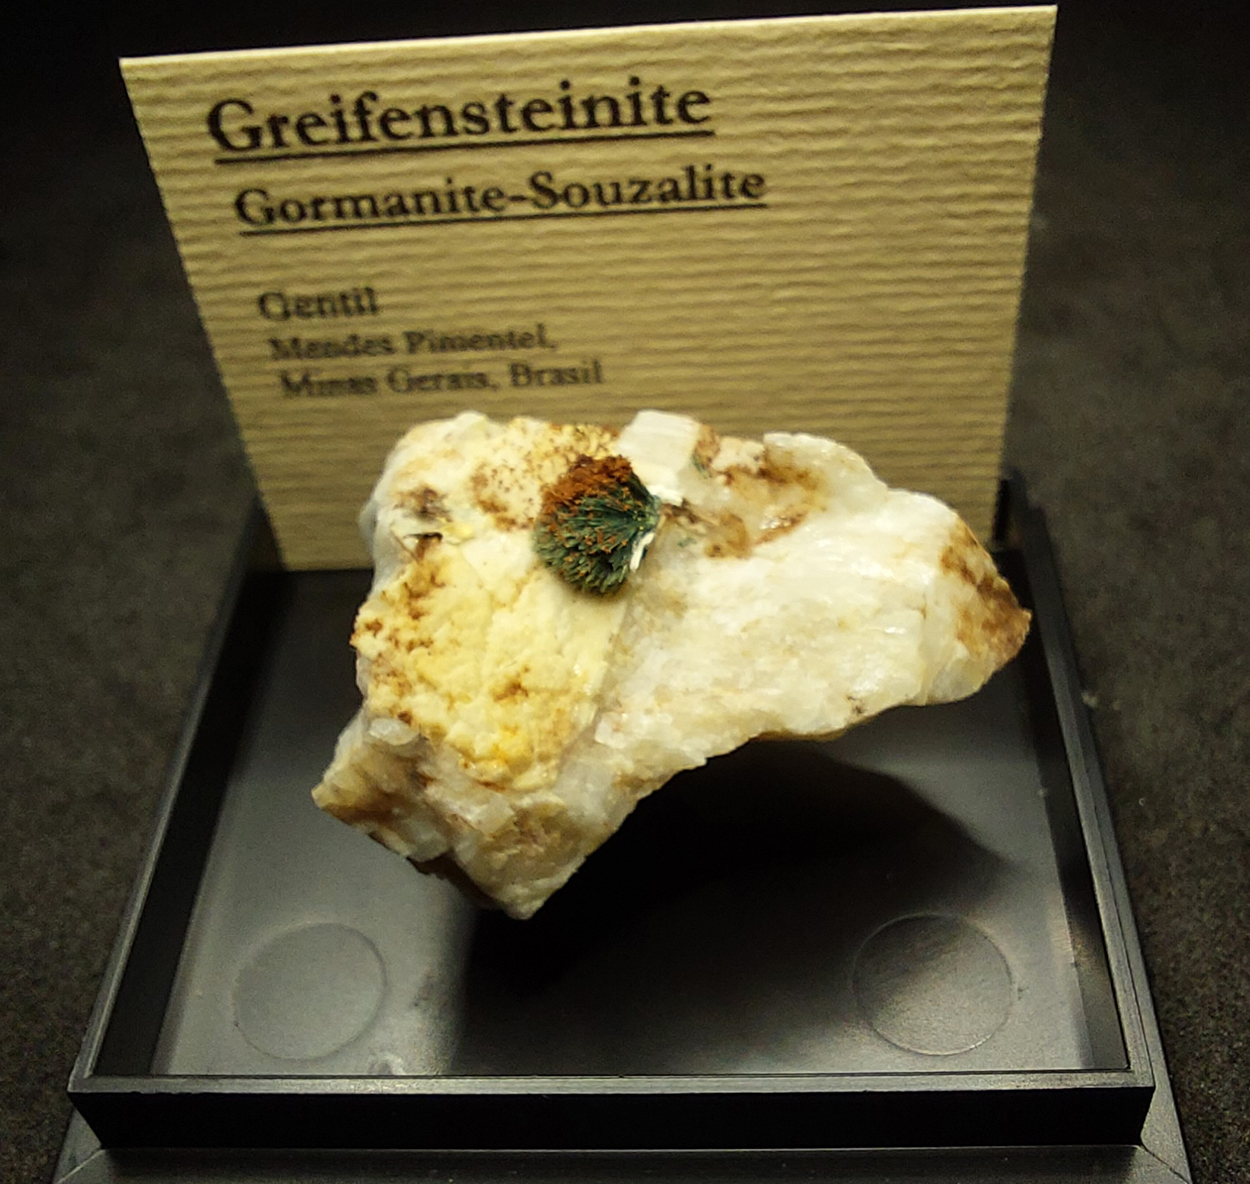 Greifensteinite Eosphorite & Gormanite-Souzalite Series